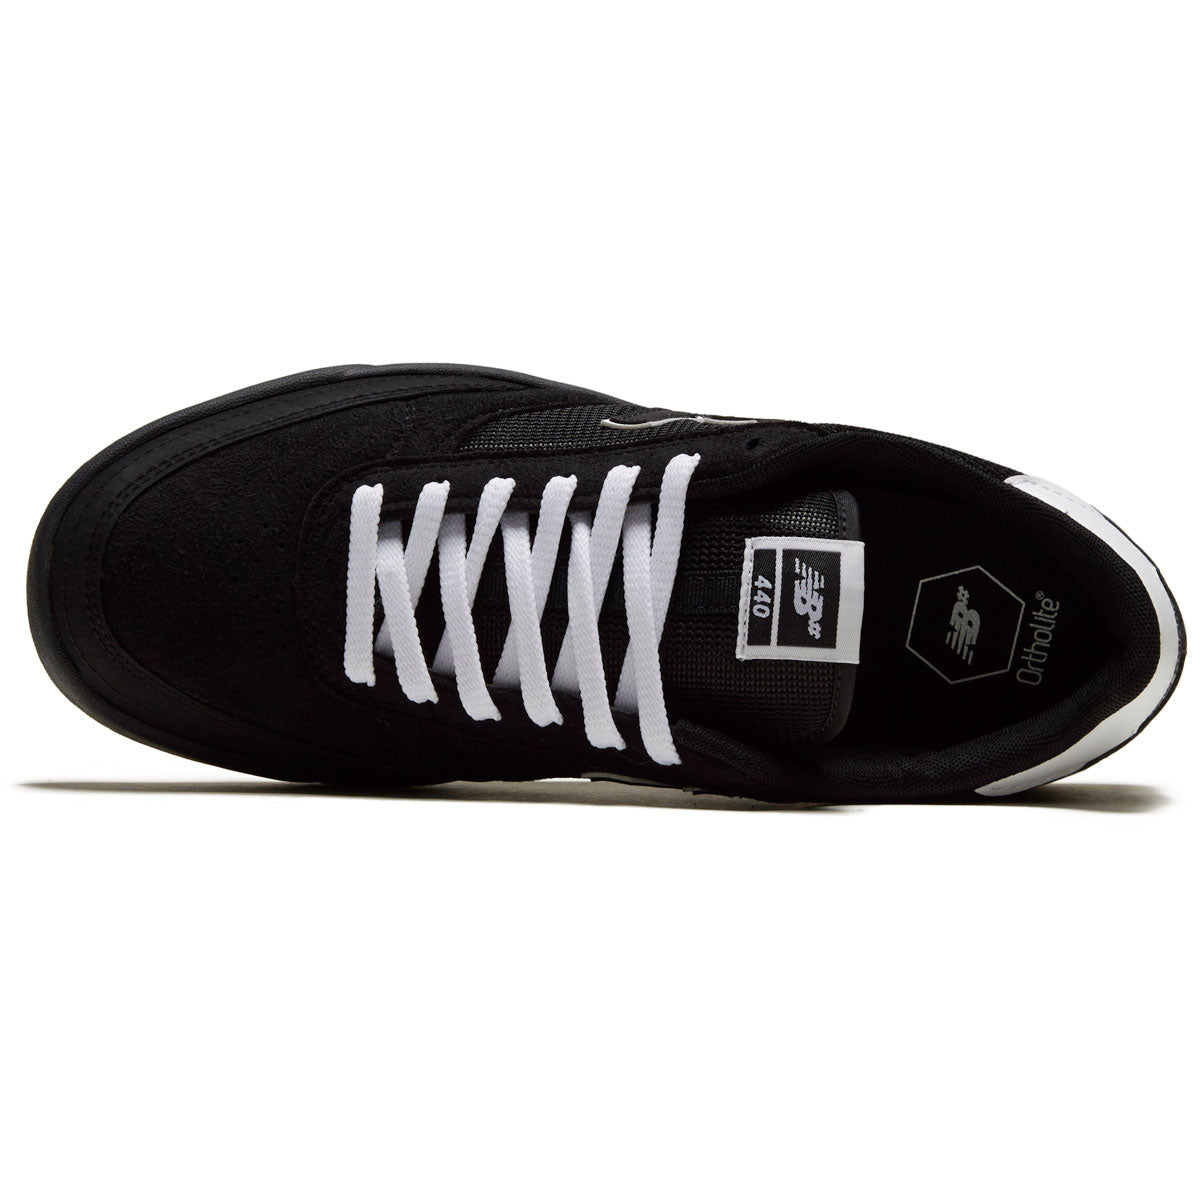 New Balance 440 Shoes - Black/White Vegan image 3